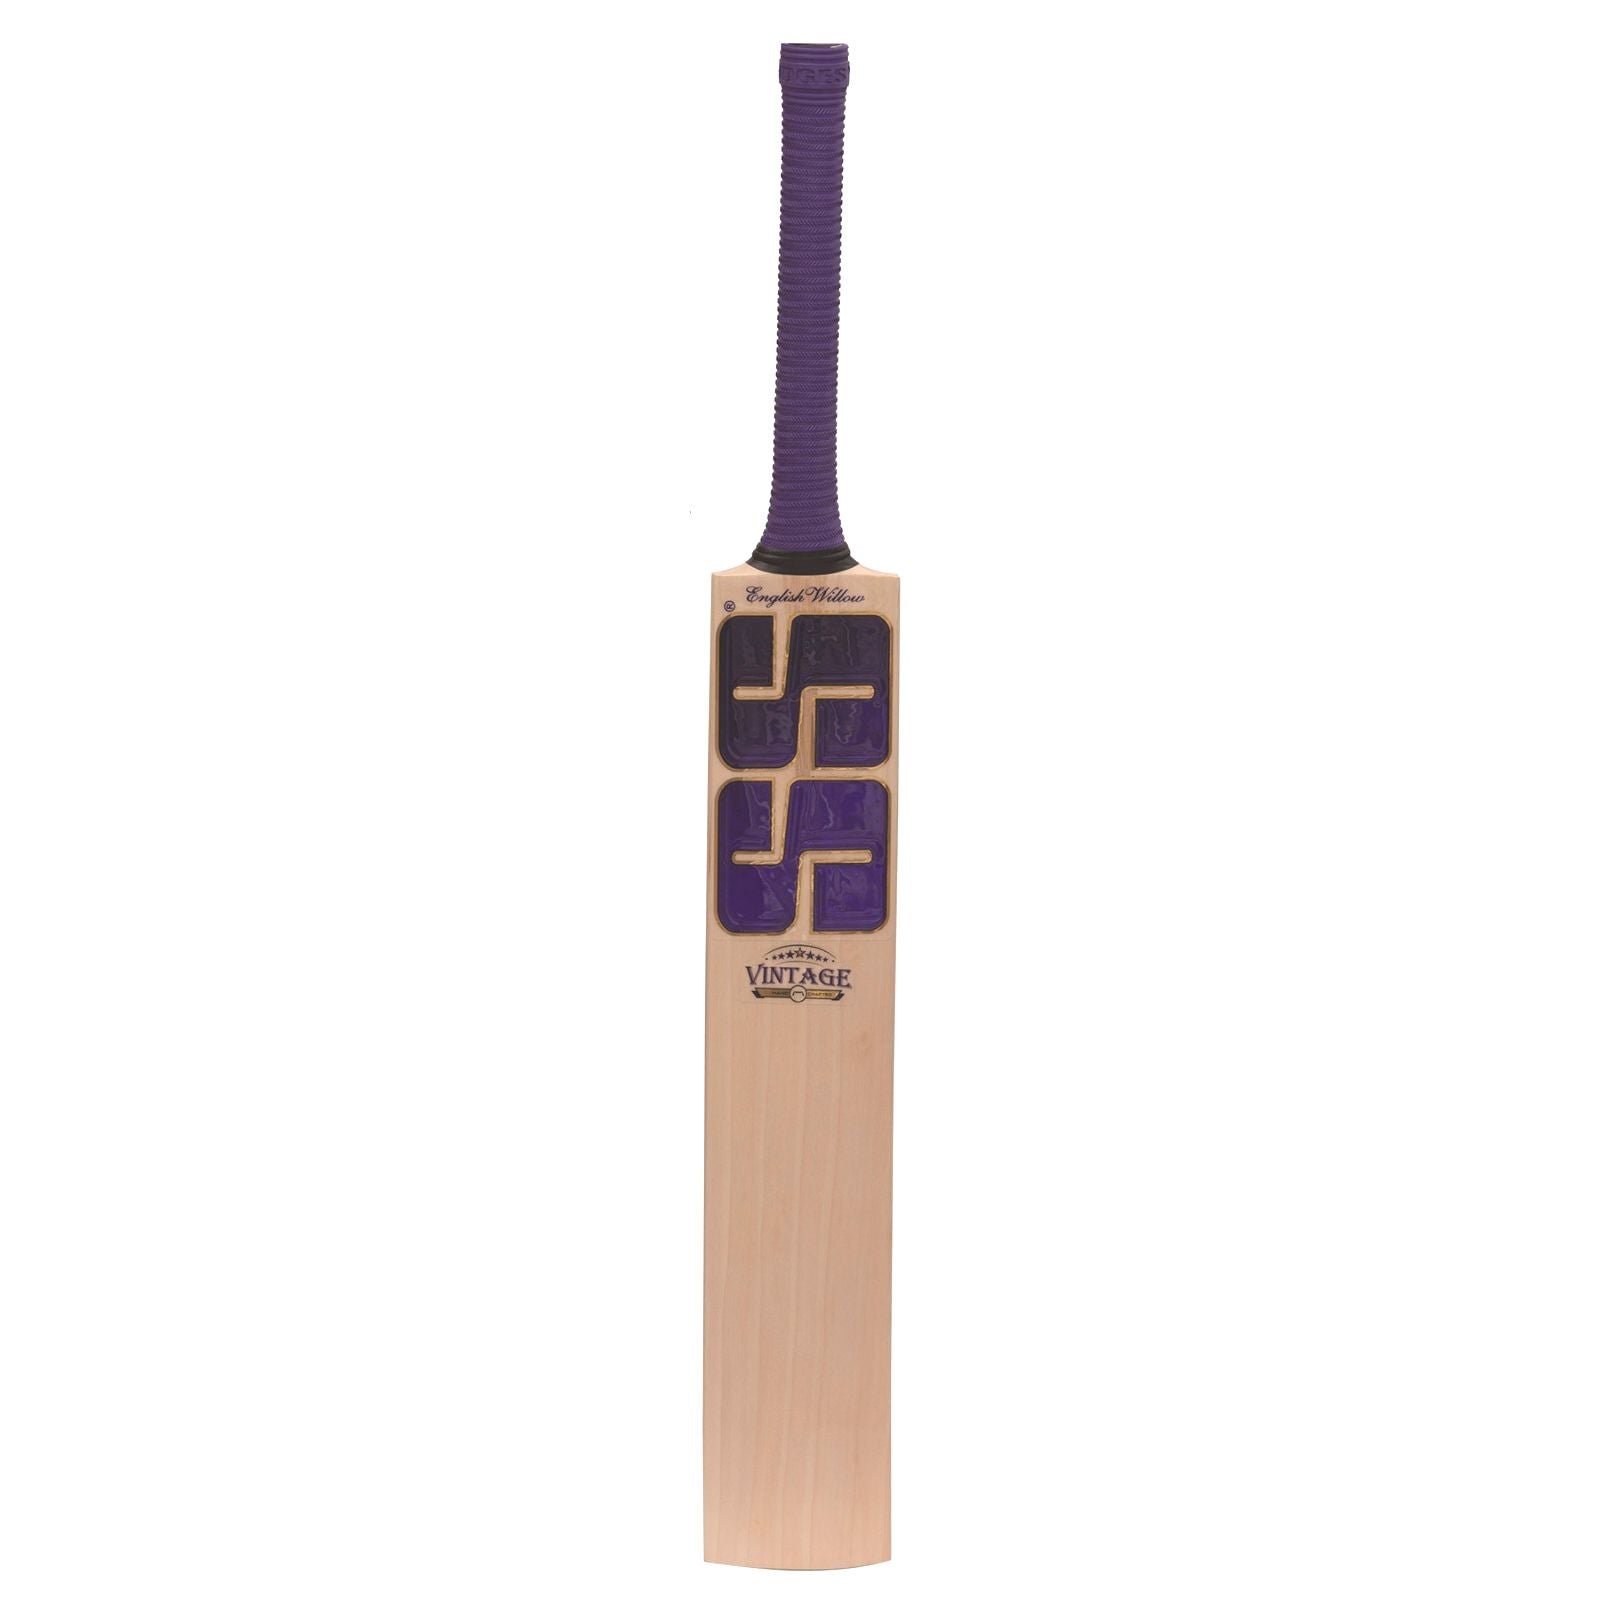 SS Vintage 5.0 Cricket Bat - Senior